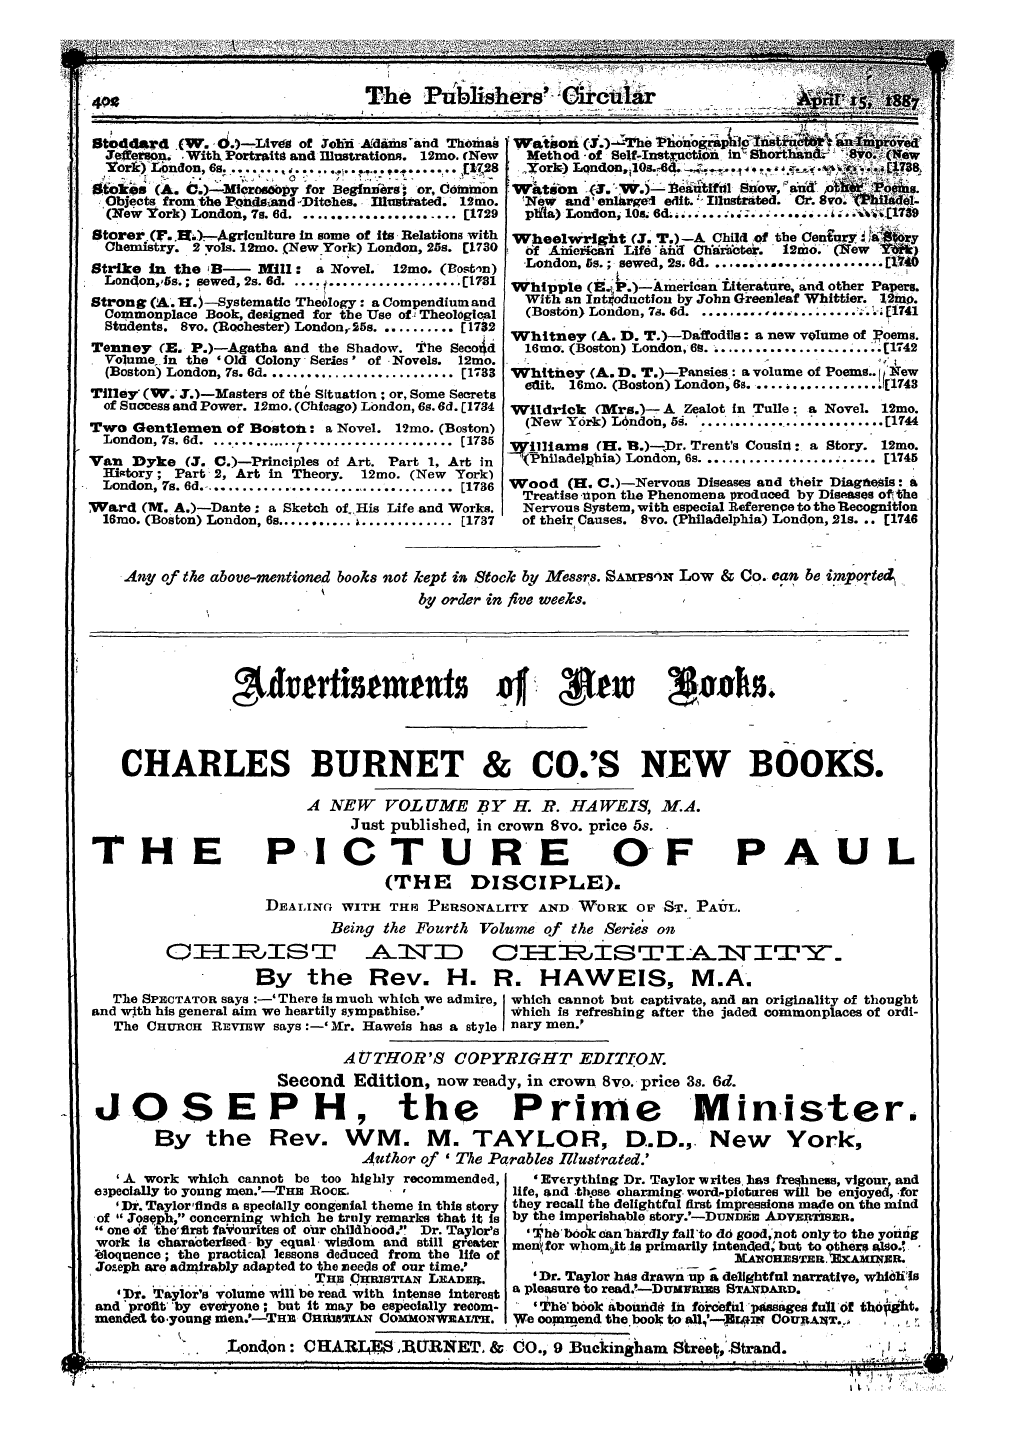 Publishers’ Circular (1880-1890): jS F Y, 1st edition - Ad02403